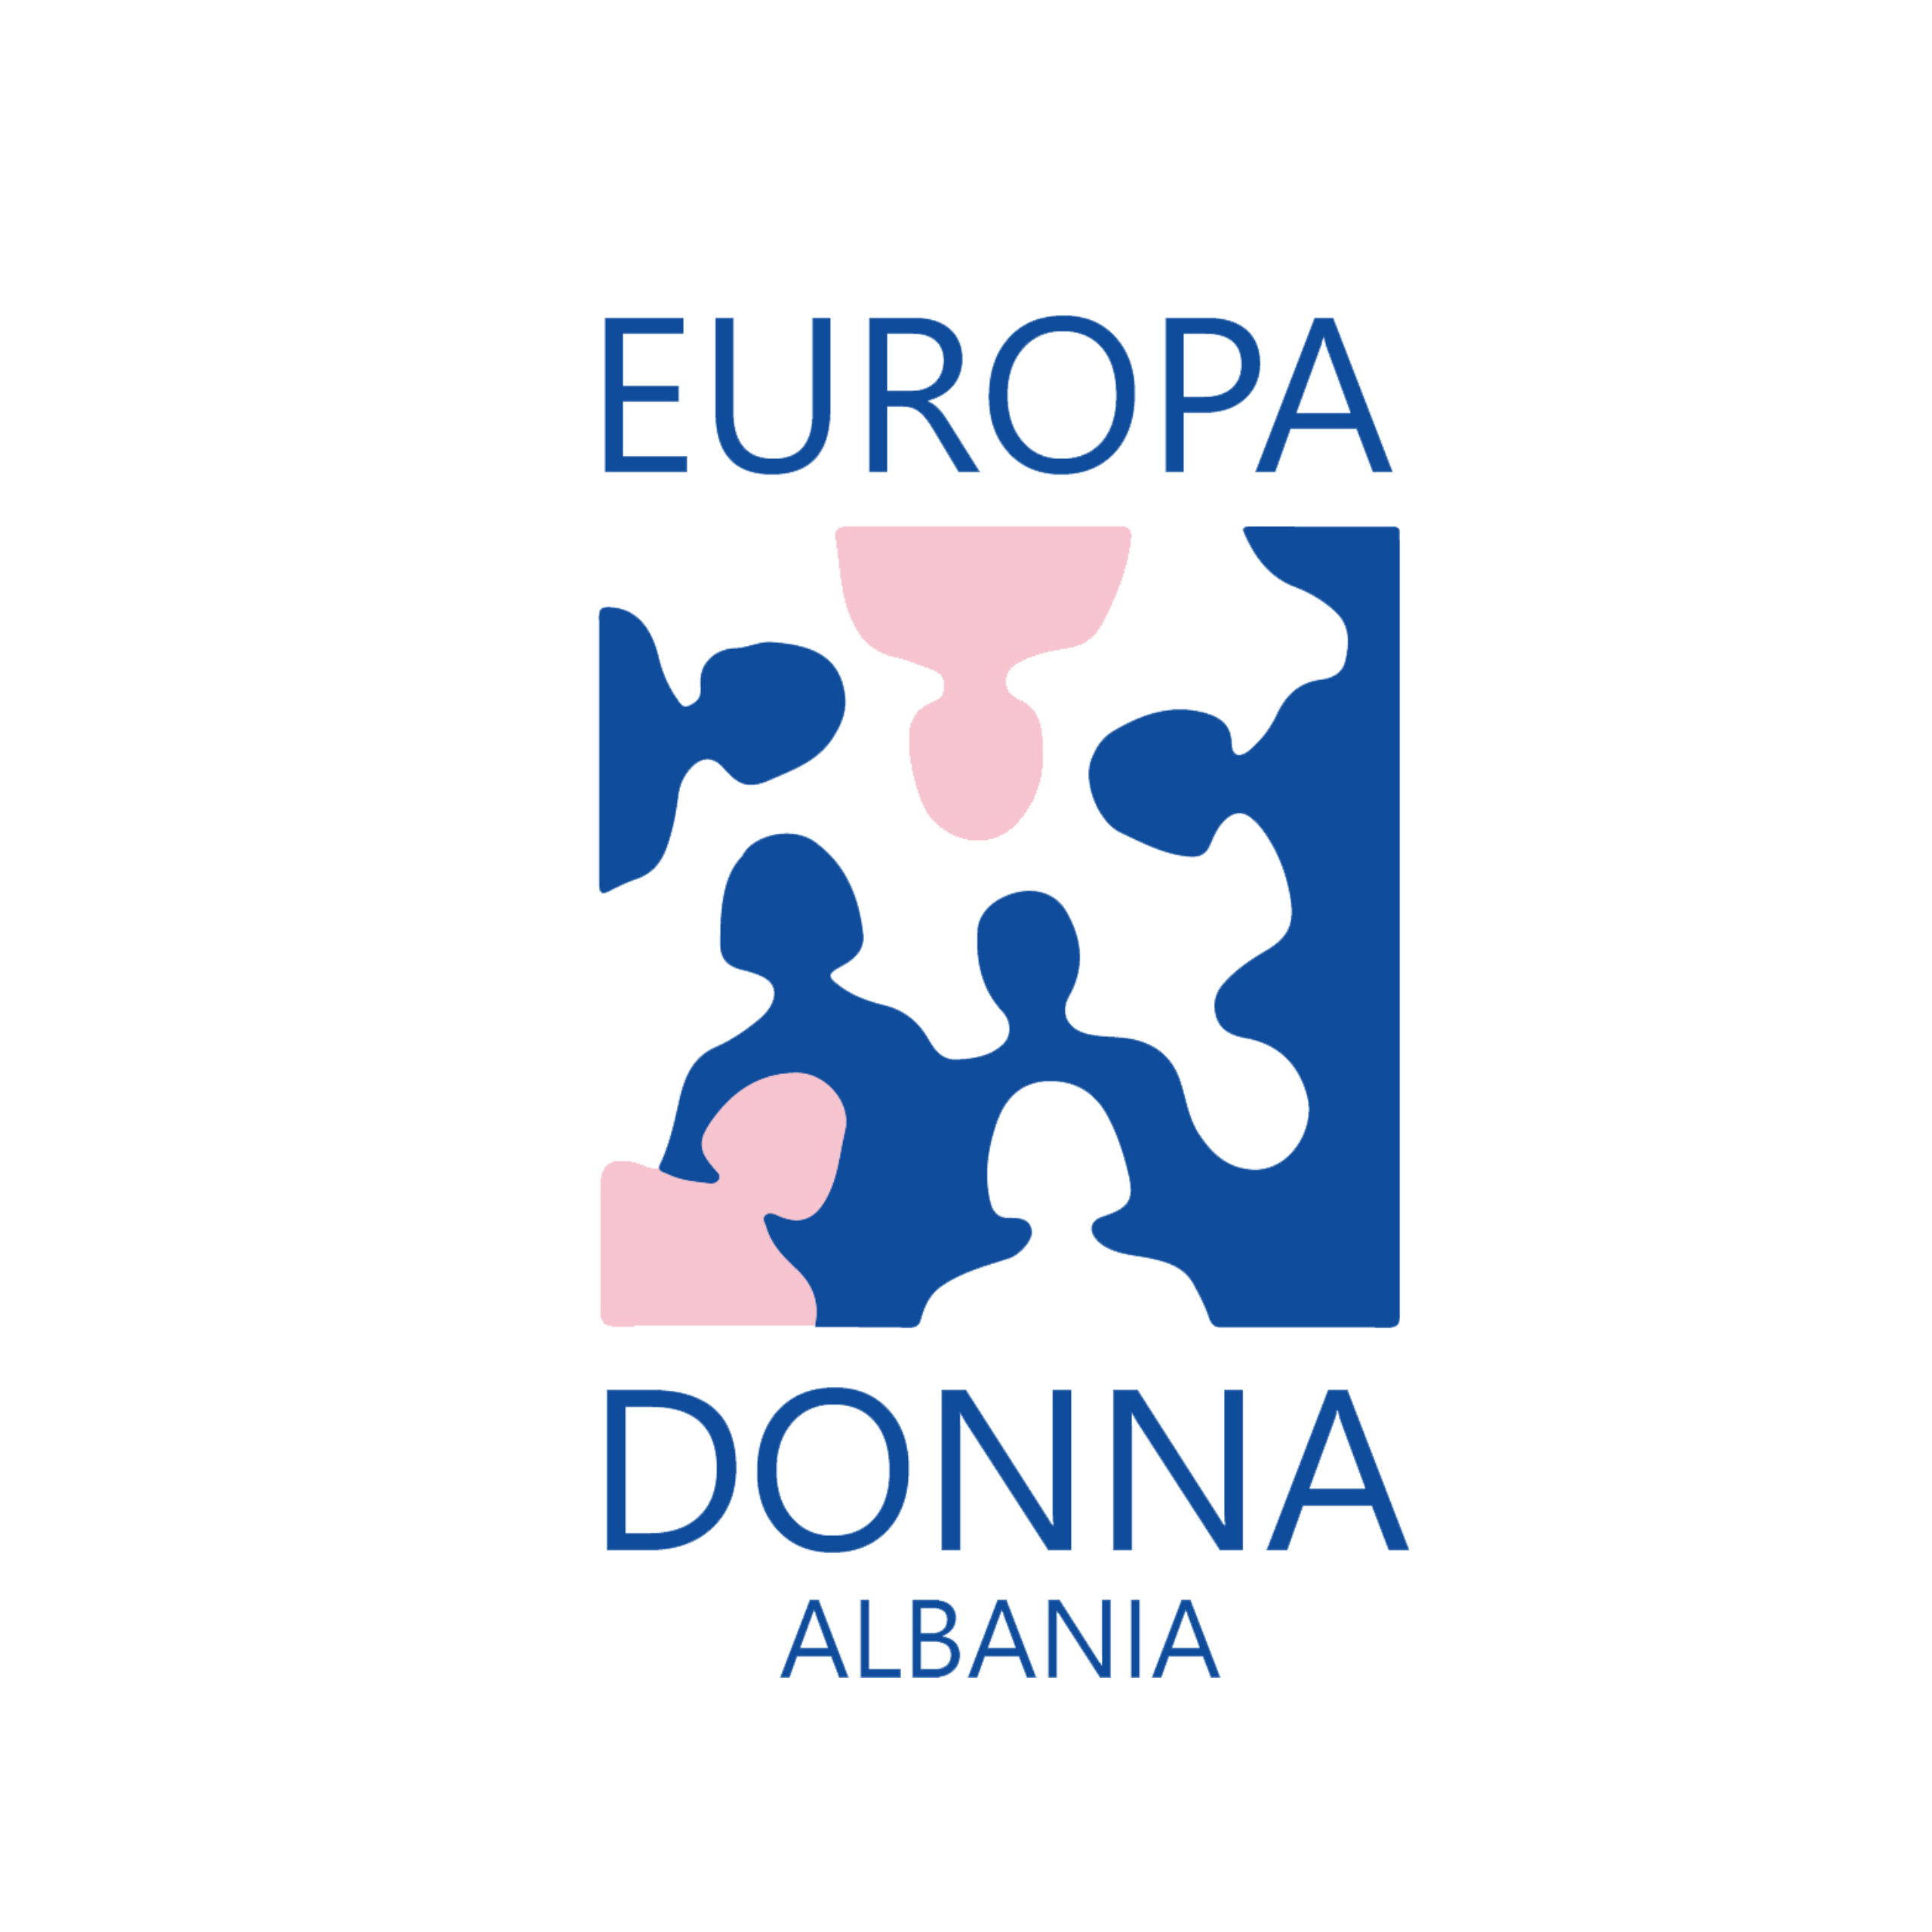 Europa Donna Albania